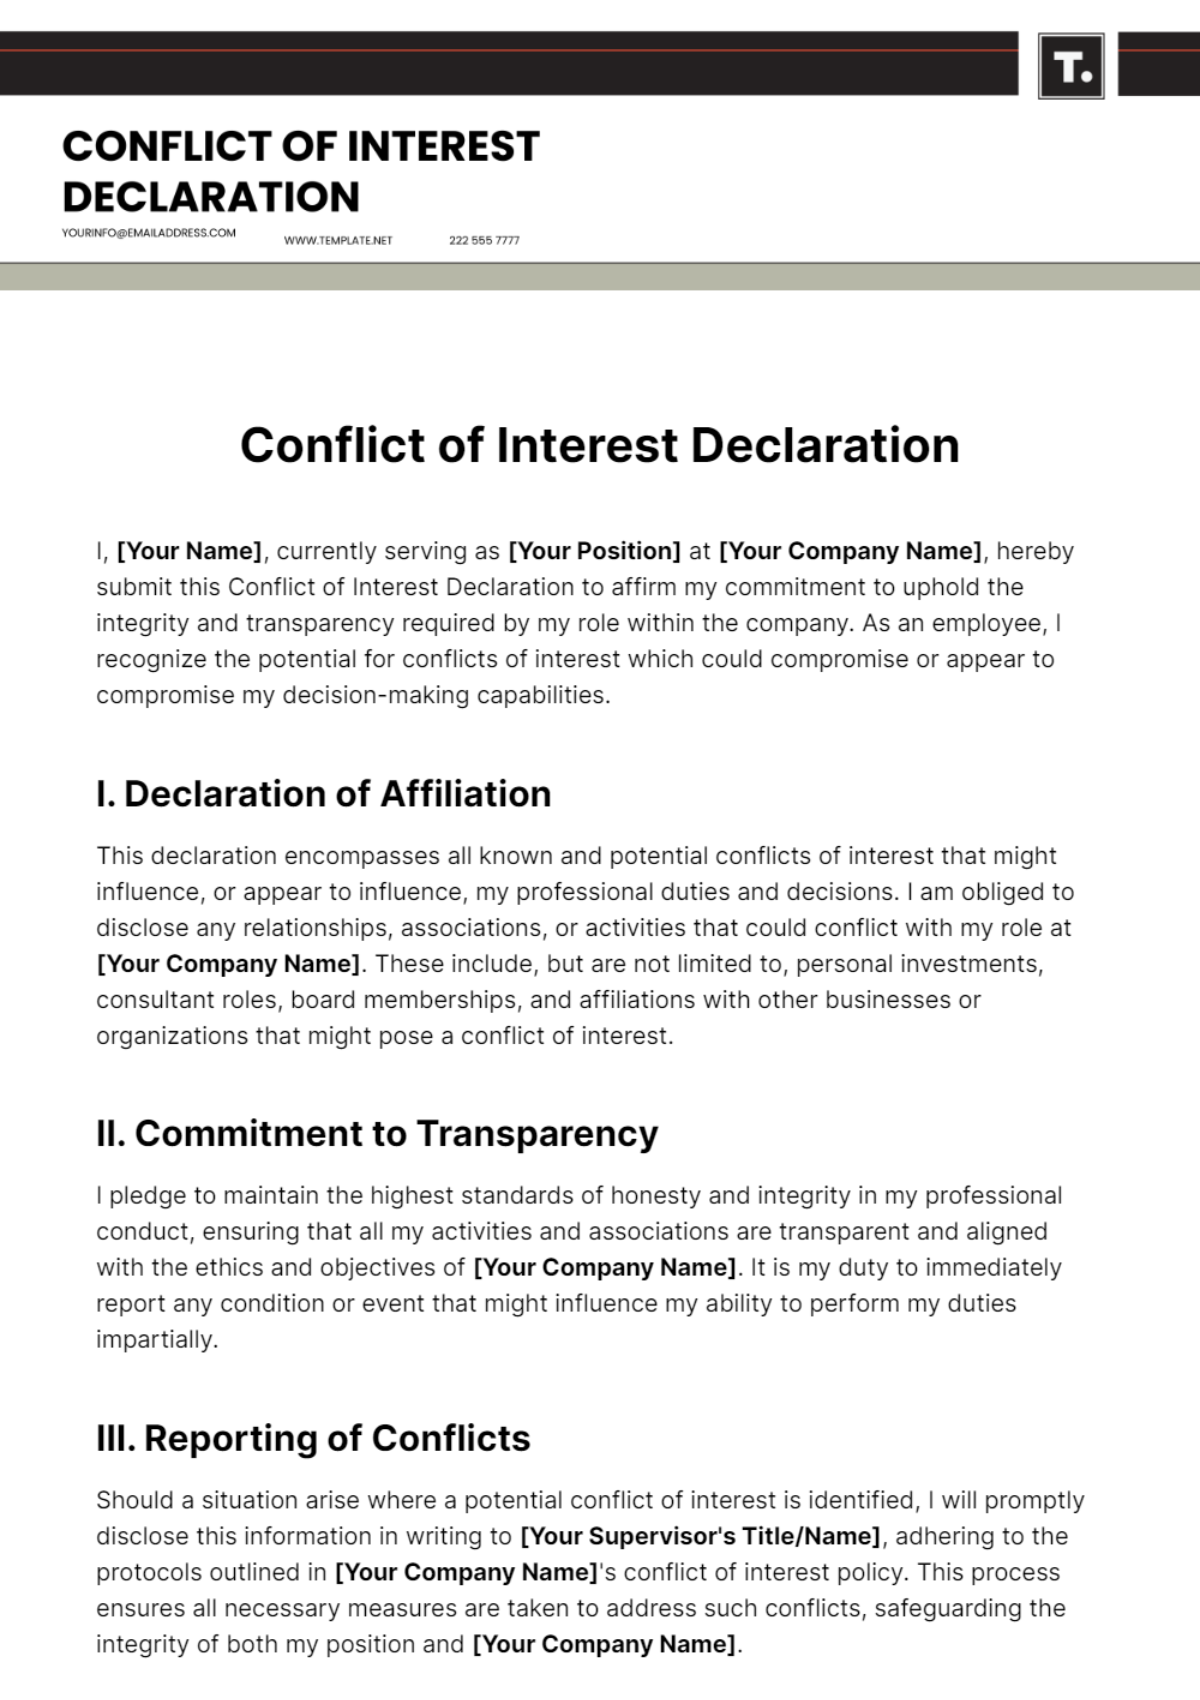 Conflict of Interest Declaration Template